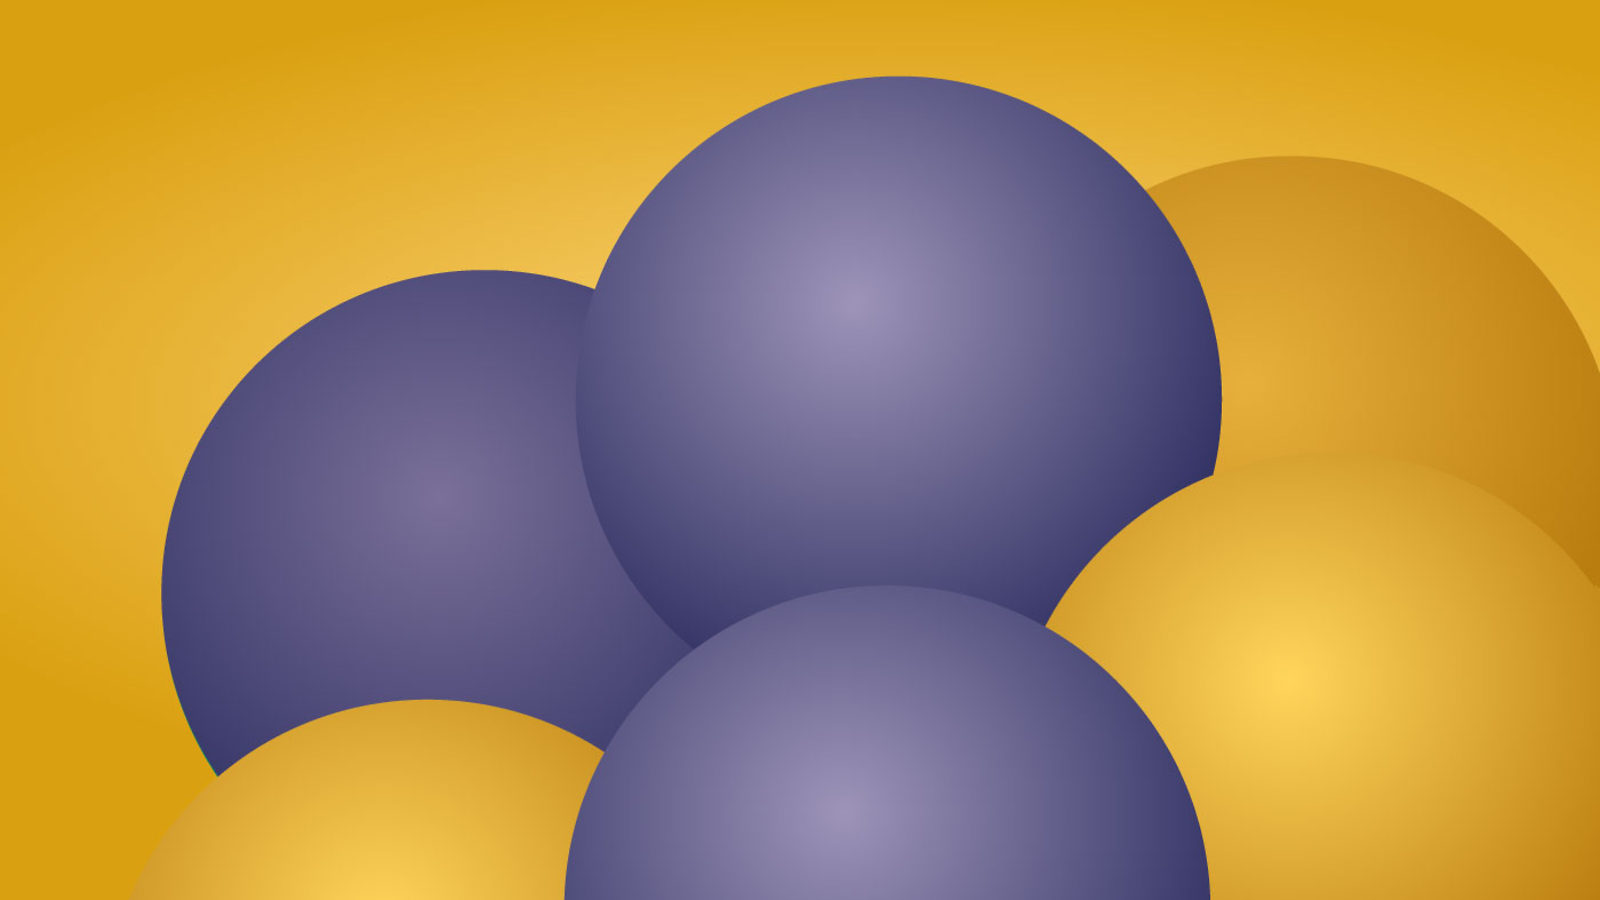 Image of the yellow and blue E=mc2 balls